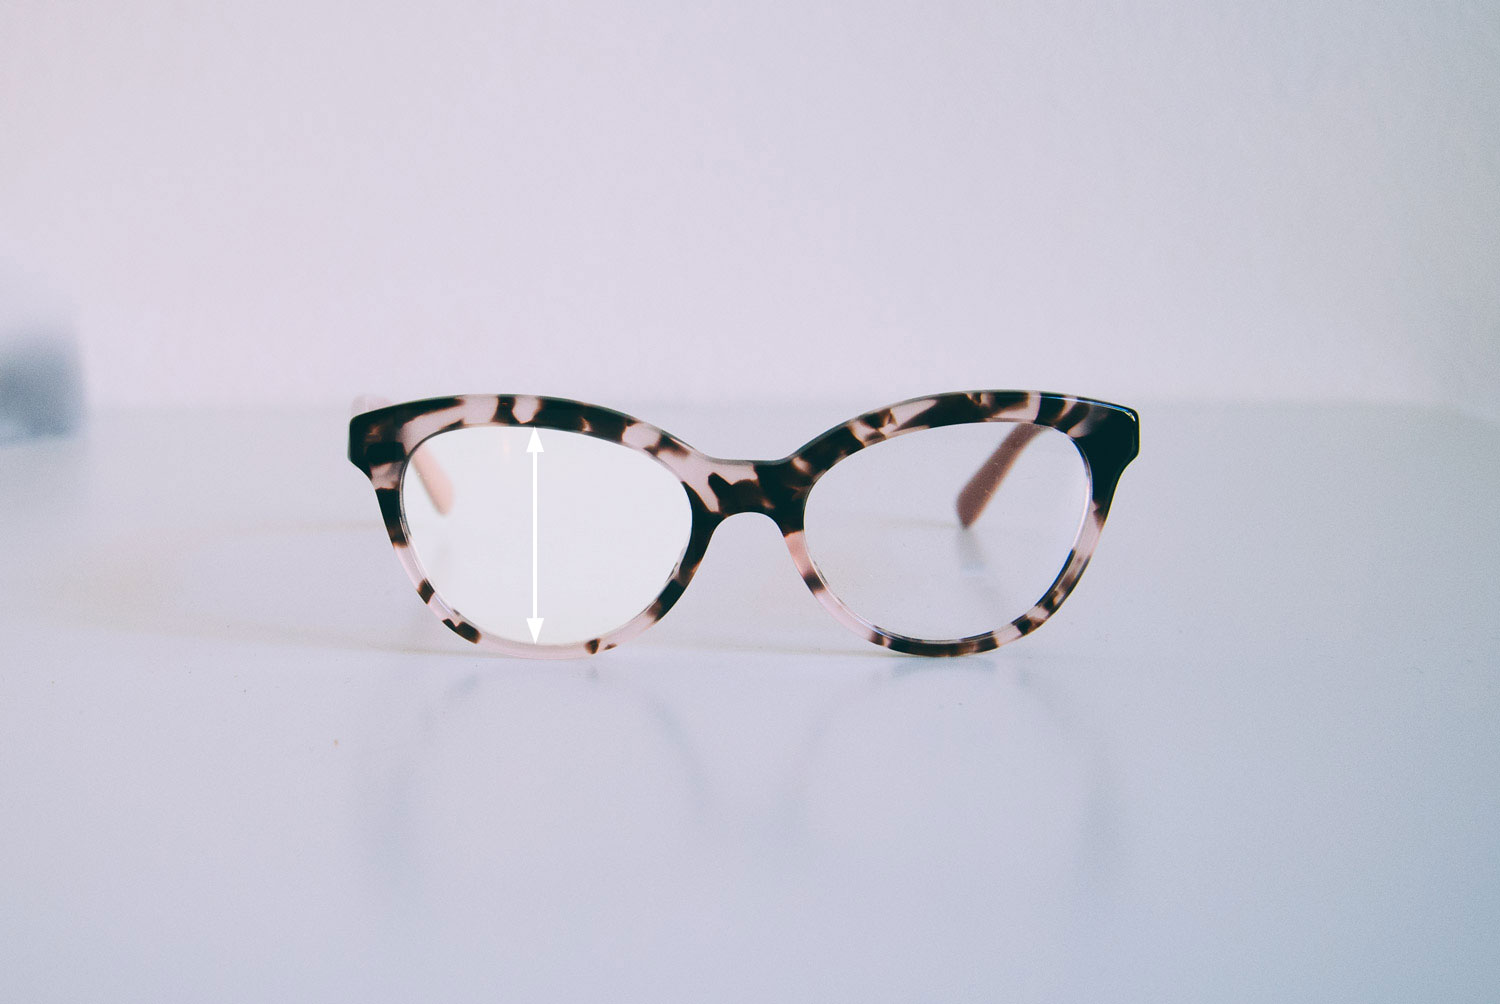 spy widow yesterday Cum să vă alegeți mărimea potrivită pentru ochelari - eyerim | eyerim blog